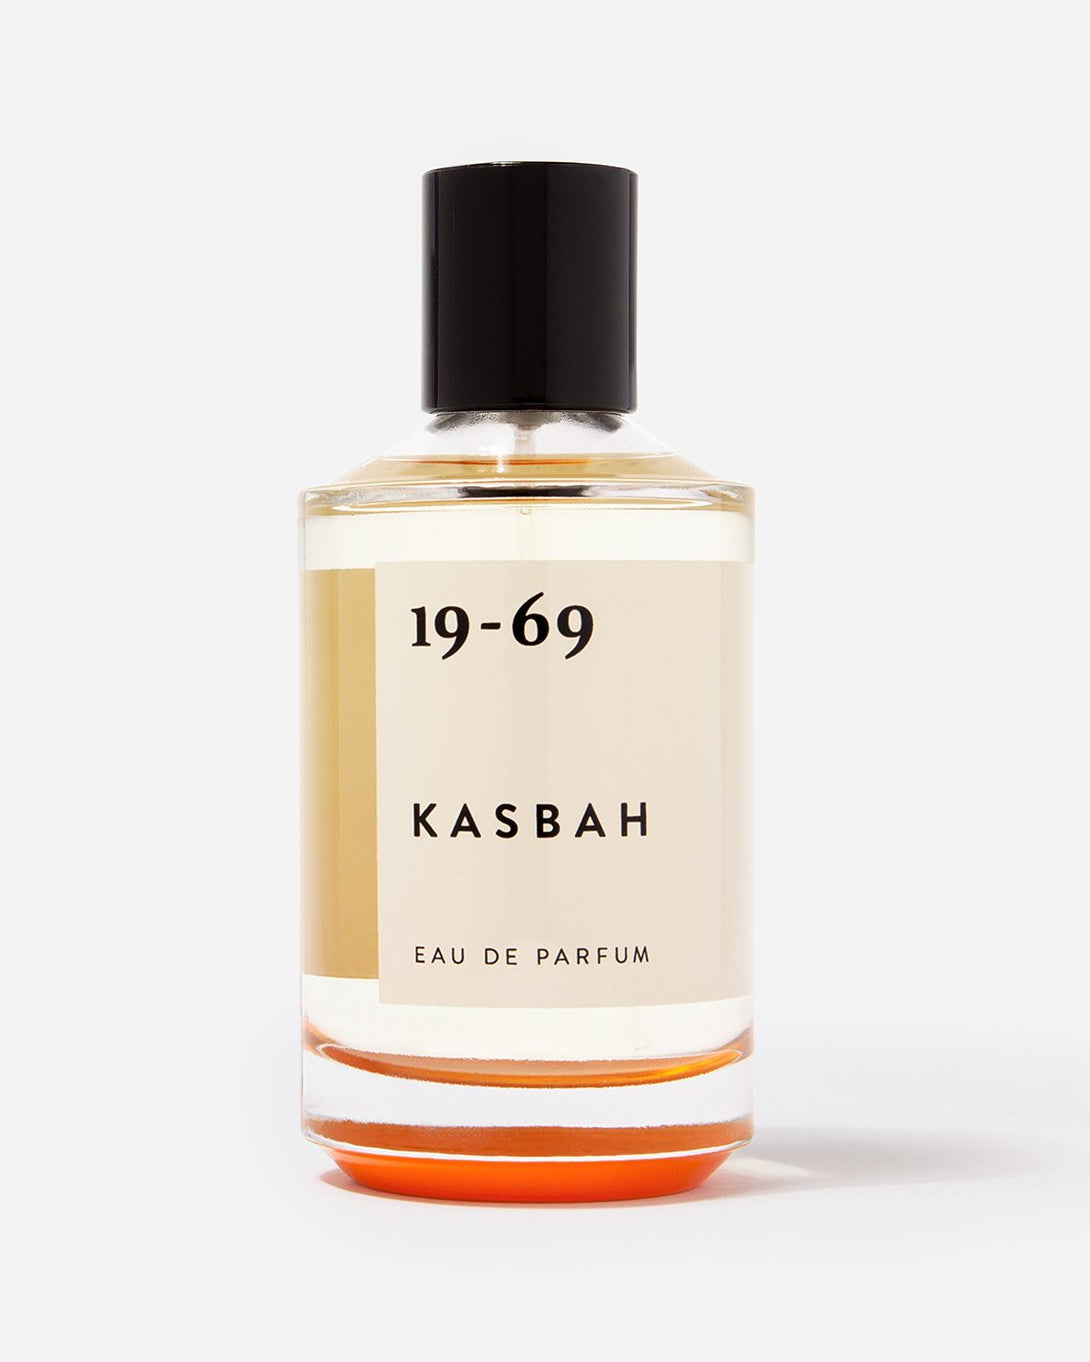 KASBAH perfume for men and women unisex kasbah 100ml 19-69